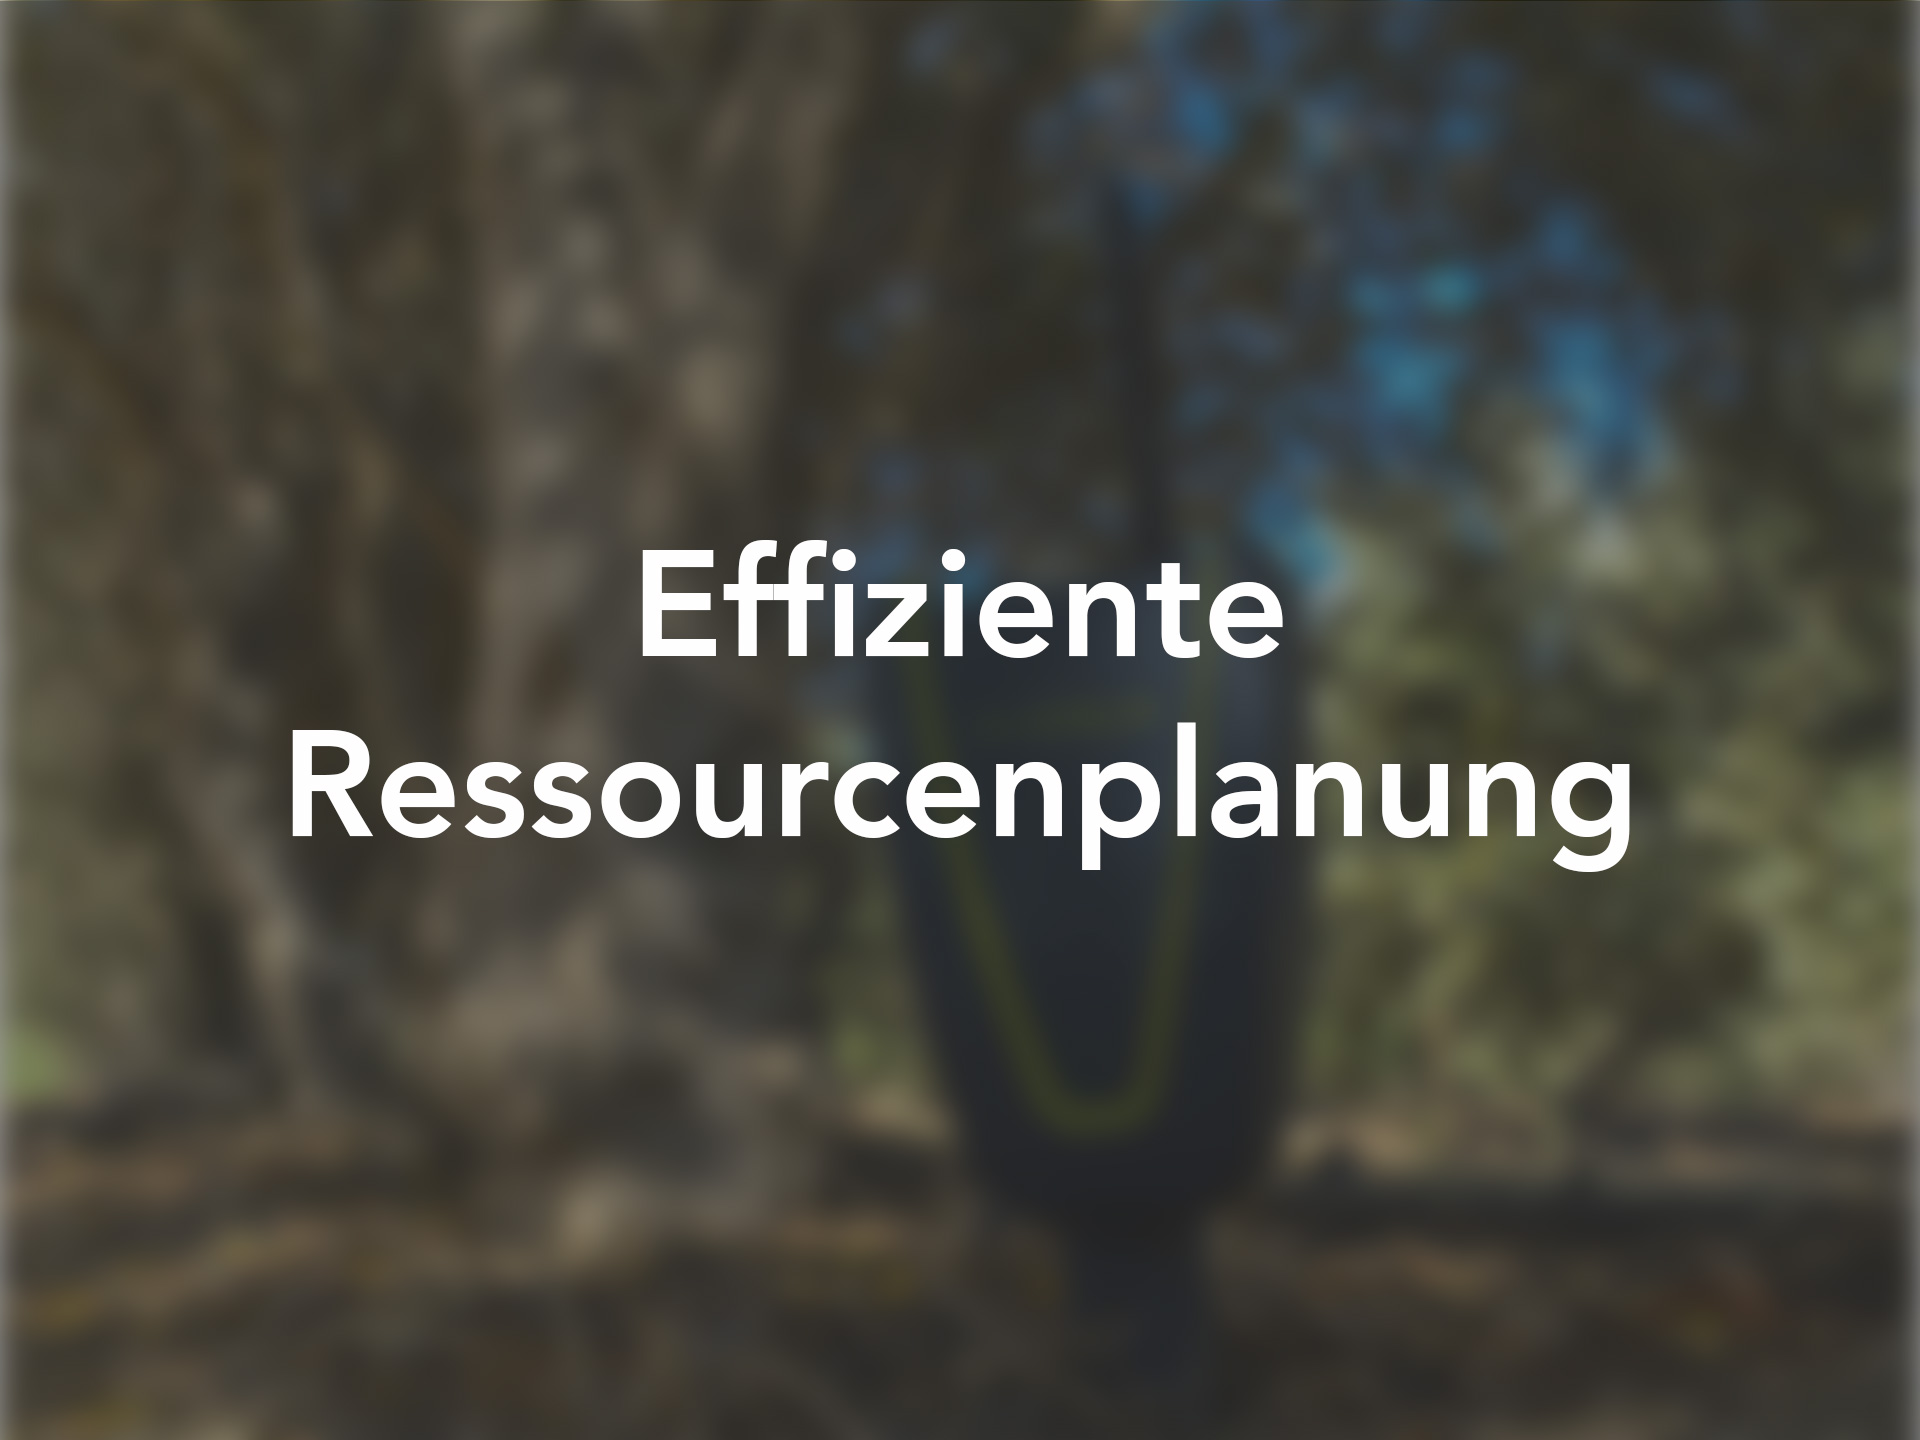 Effiziente Resourcenplanung